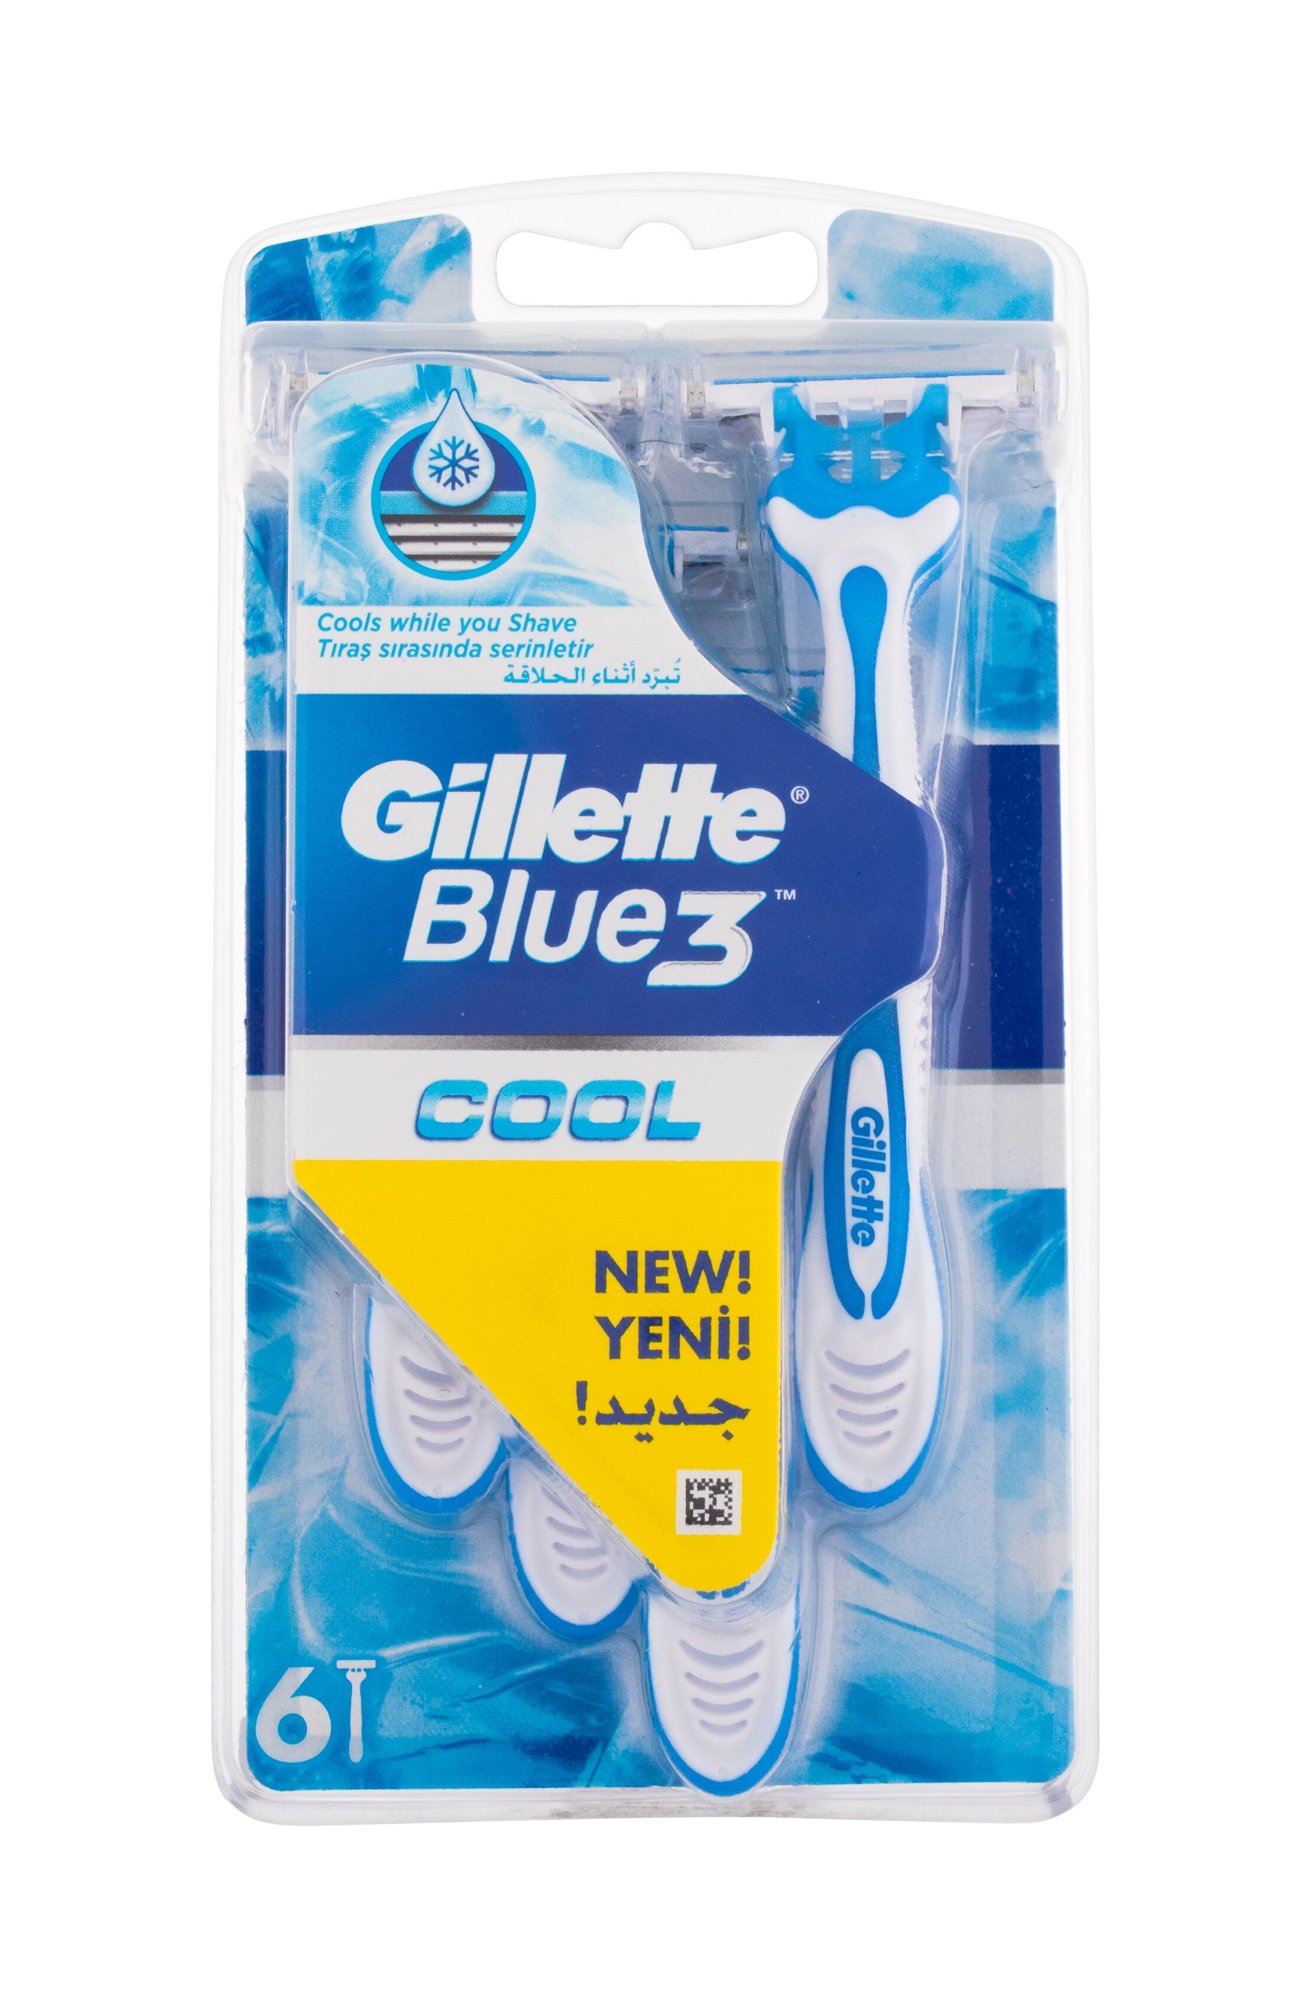 Gillette Blue3 Cool 6vnt skustuvas